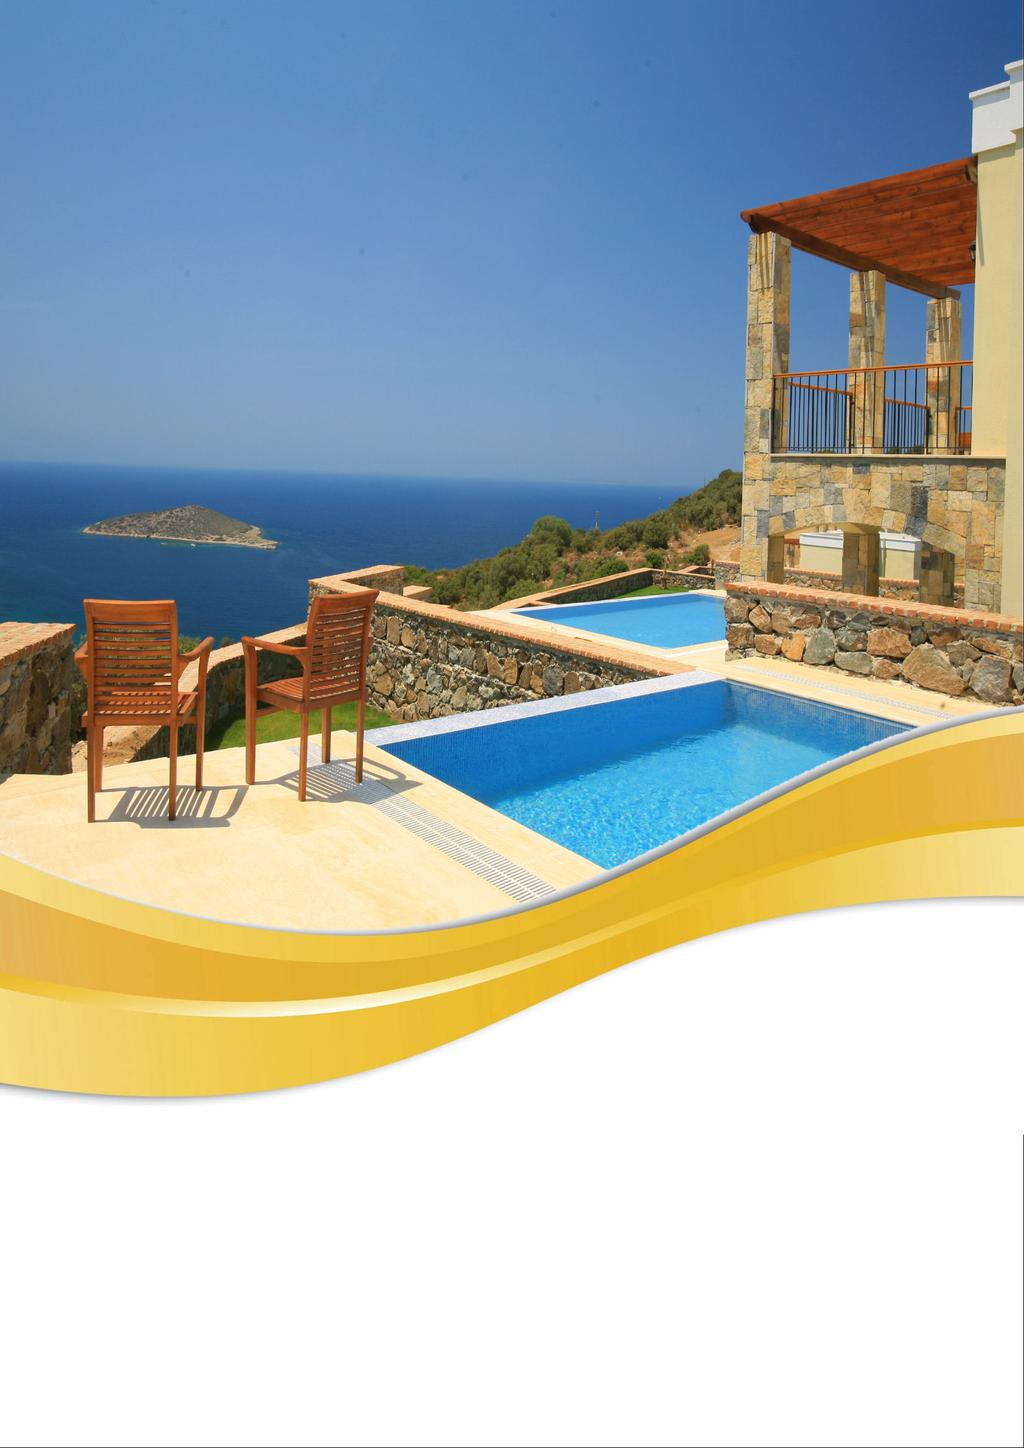 Sensational Aegean views